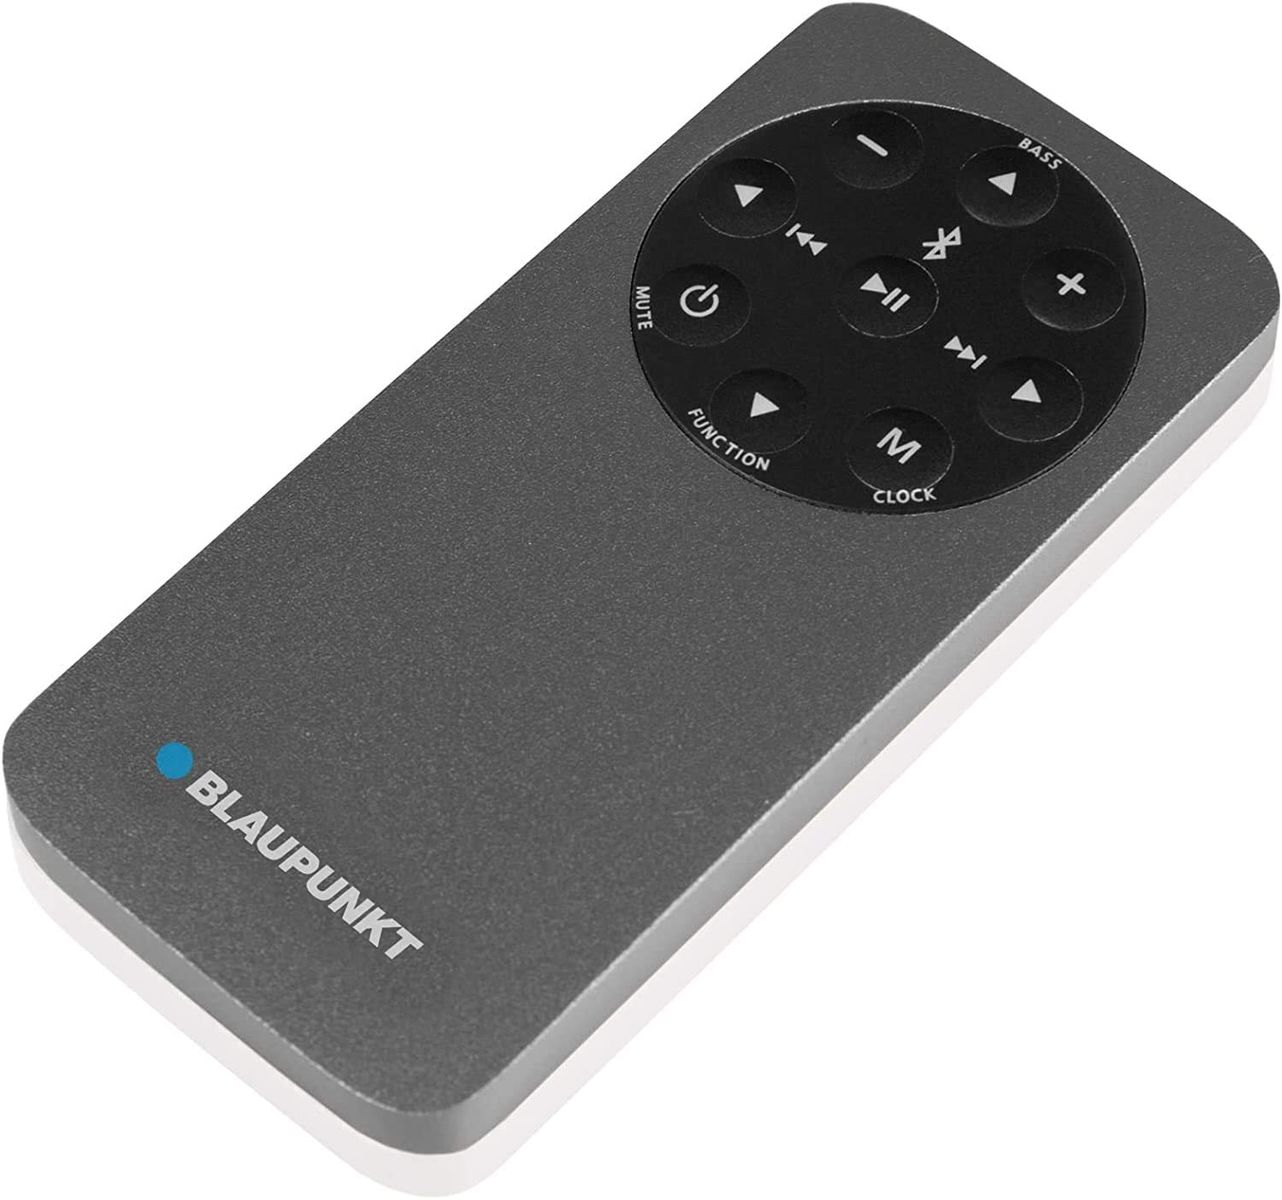 Blaupunkt ST 1000 Standlautsprecher Bluetooth Display Stereo Sound Subwoofer